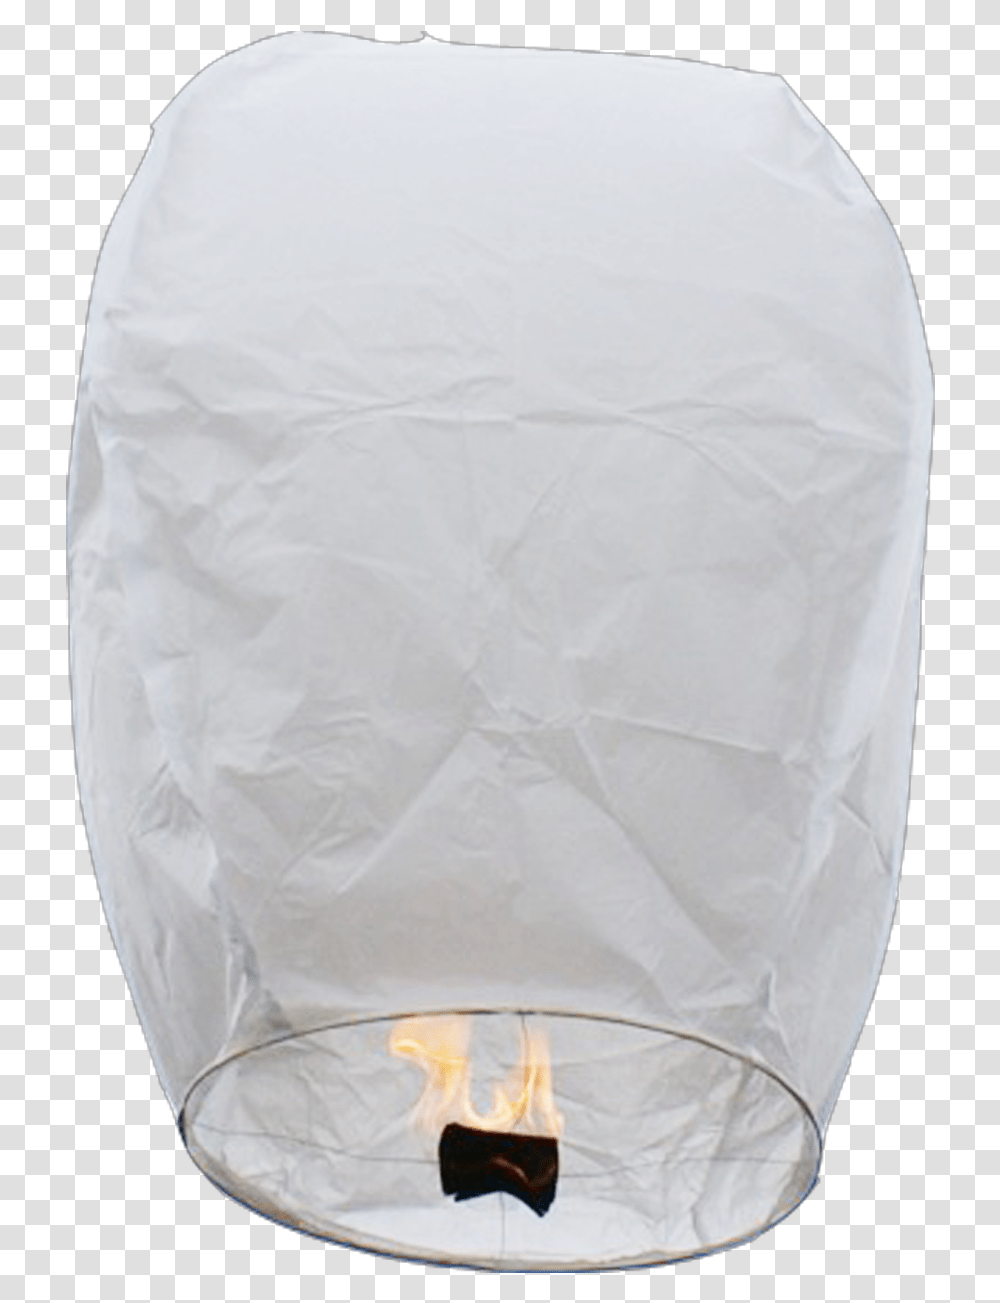 Lanterns, Diaper, Paper, Plastic Bag, Jar Transparent Png